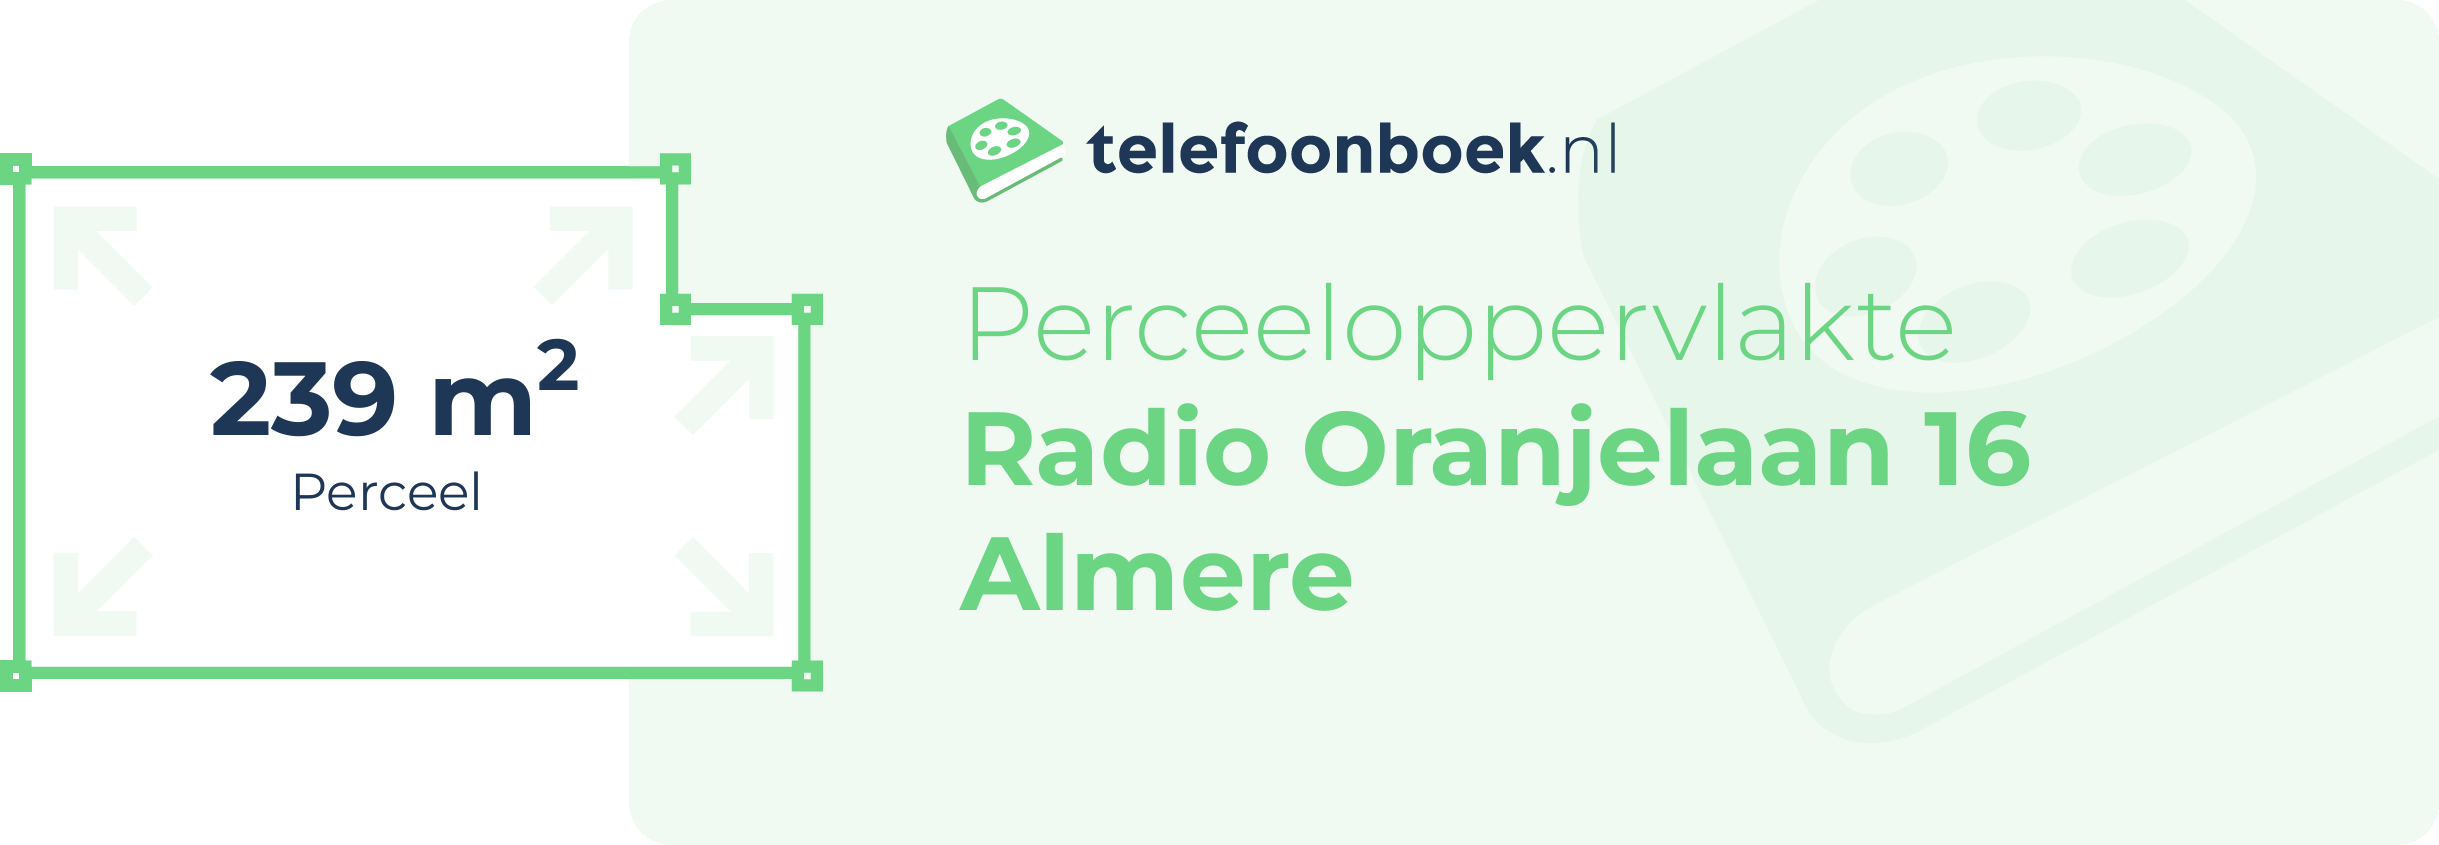 Perceeloppervlakte Radio Oranjelaan 16 Almere